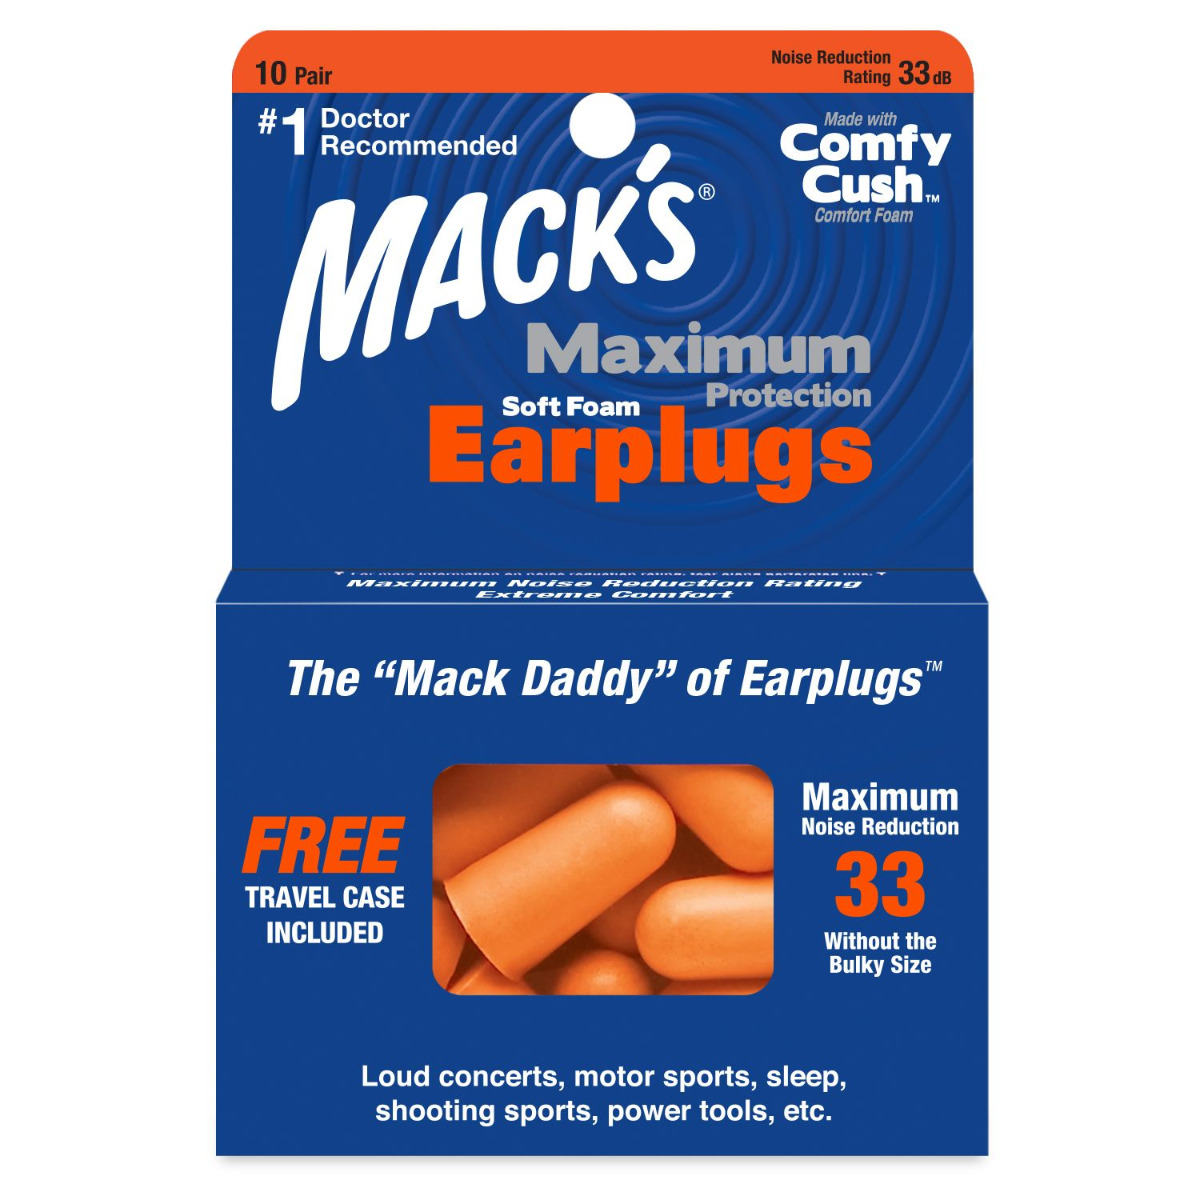 MACKS Maximum Protection špunty do uší 10 párů MACKS